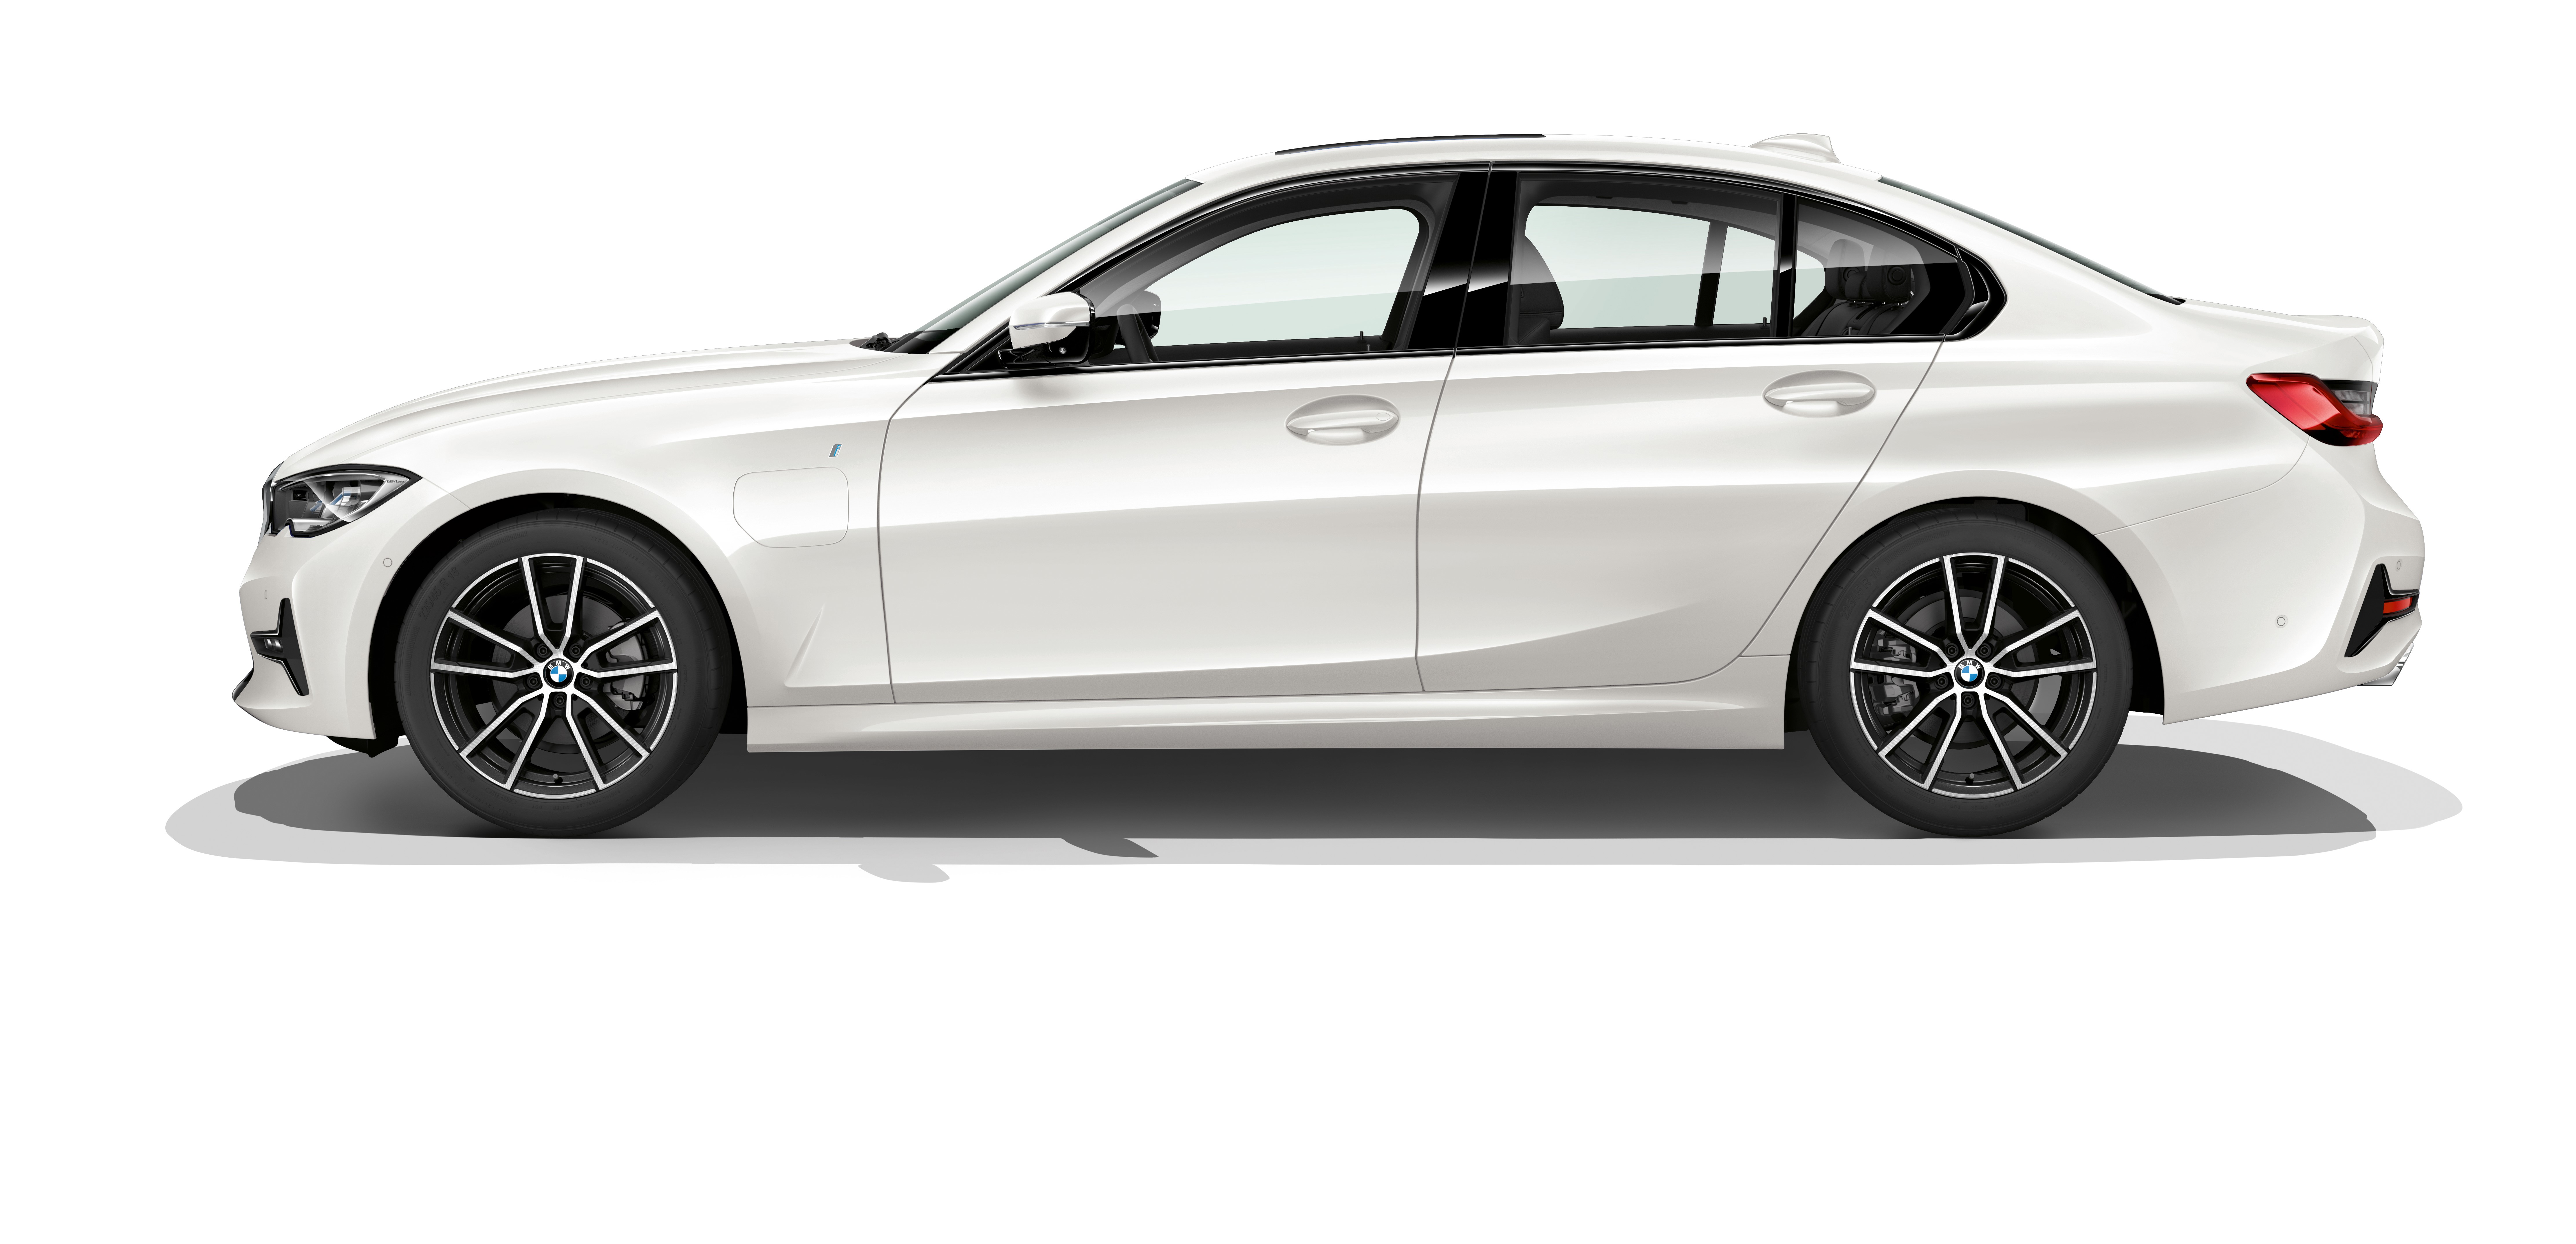 2021 BMW 330e PHEV Adds Range, Performance, Sophistication | WardsAuto